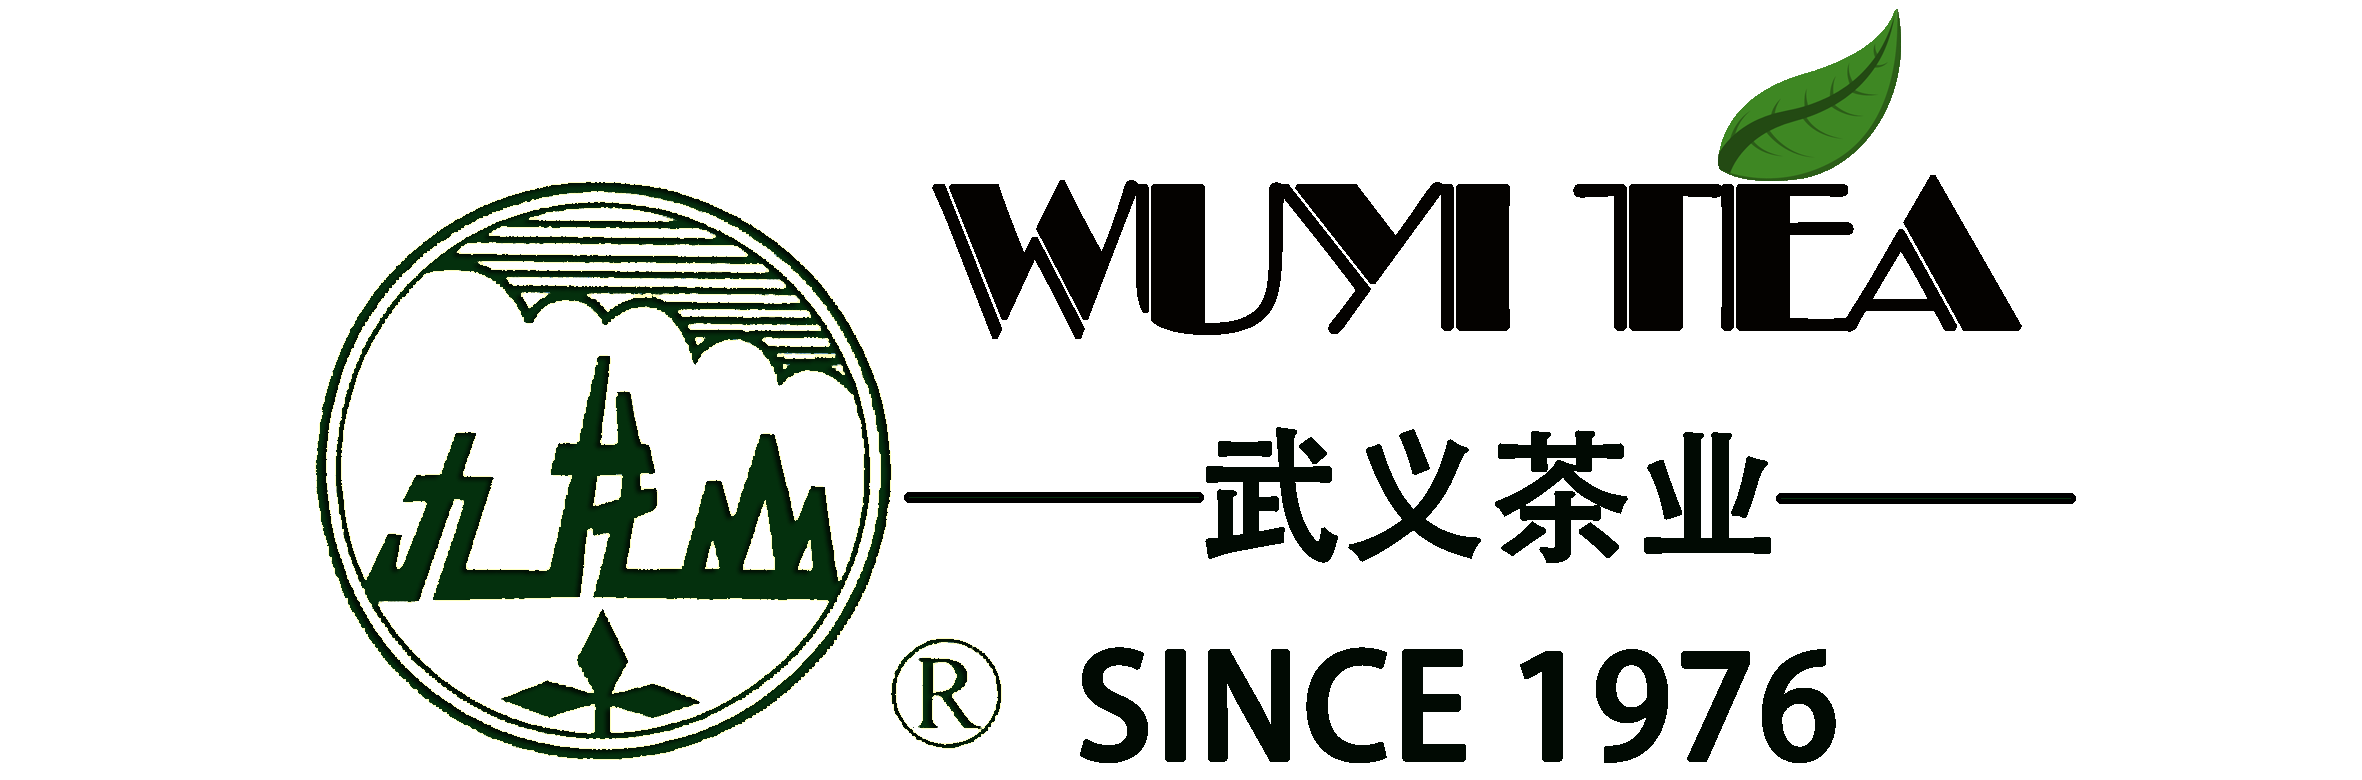 Tea is a Natural Beverage - News - Zhejiang Wuyi Tea Industry Co., Ltd.